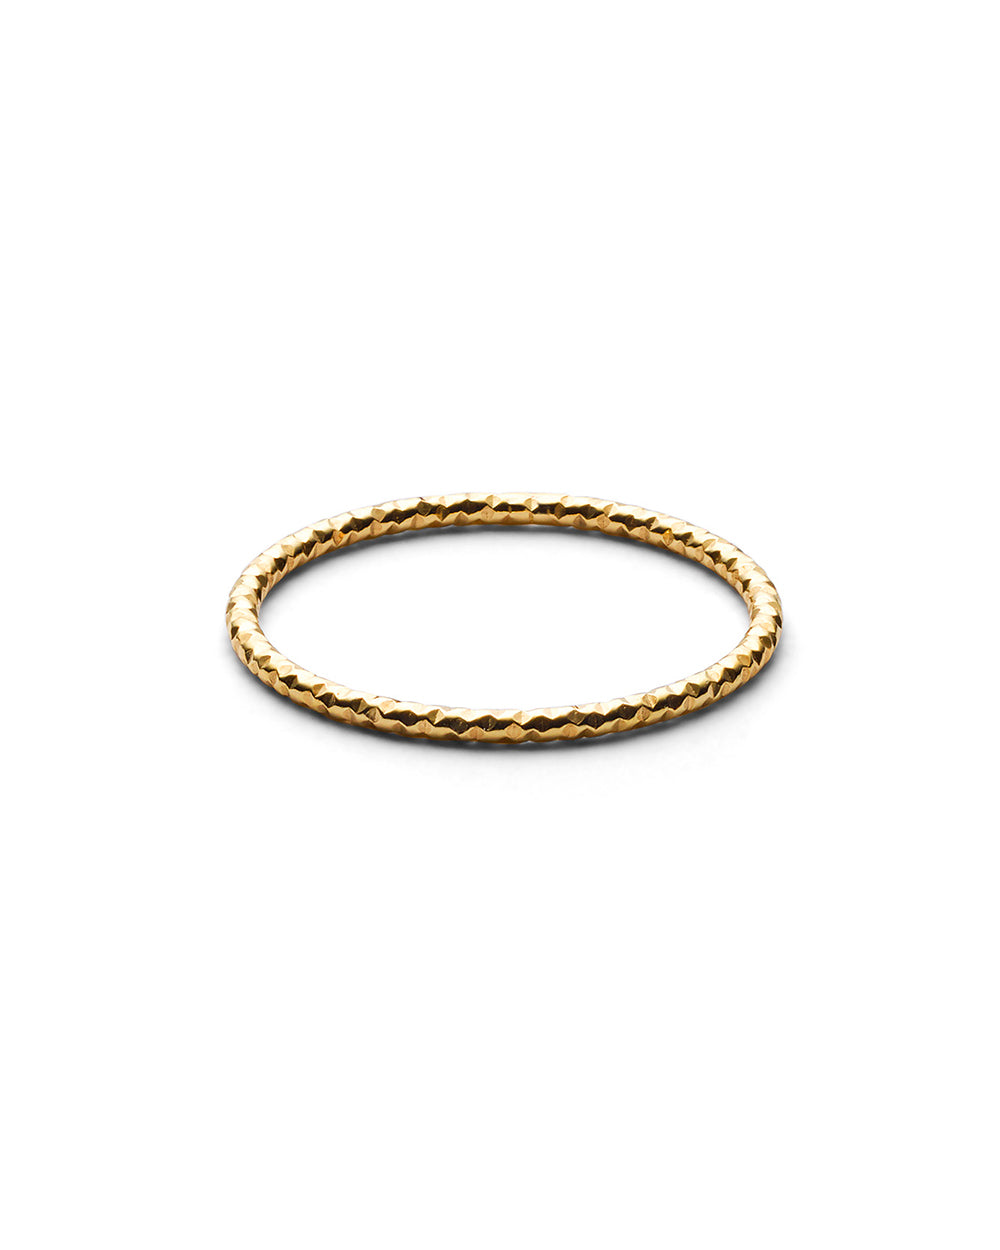 Jukserei - Ring SPARKLING - silber, roségold oder gold